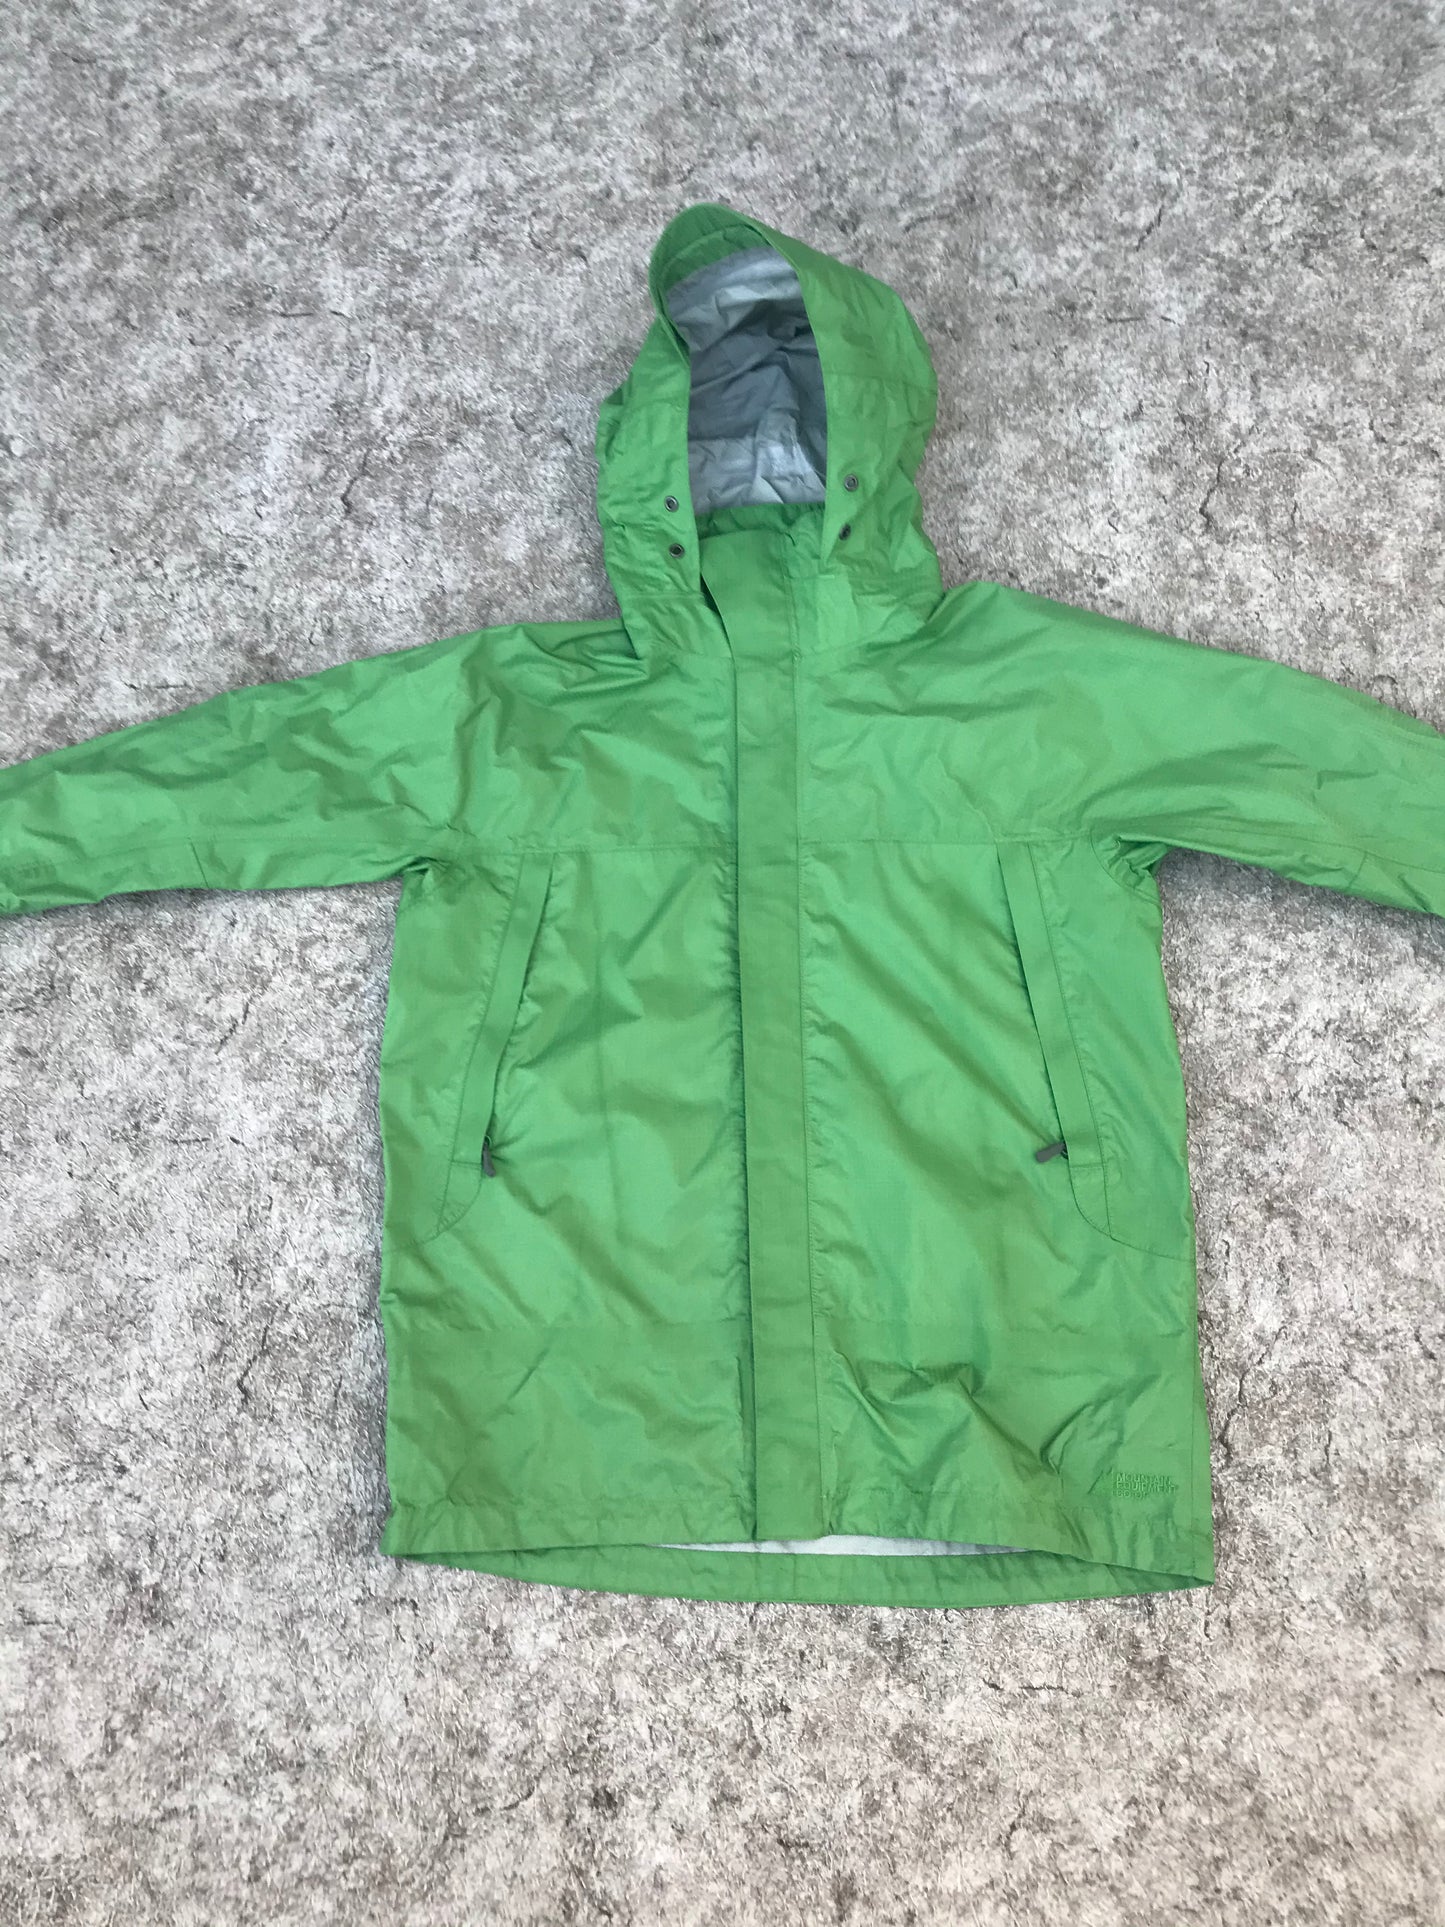 Rain Coat Child Size 12 MEC Apple Green Minor Wear